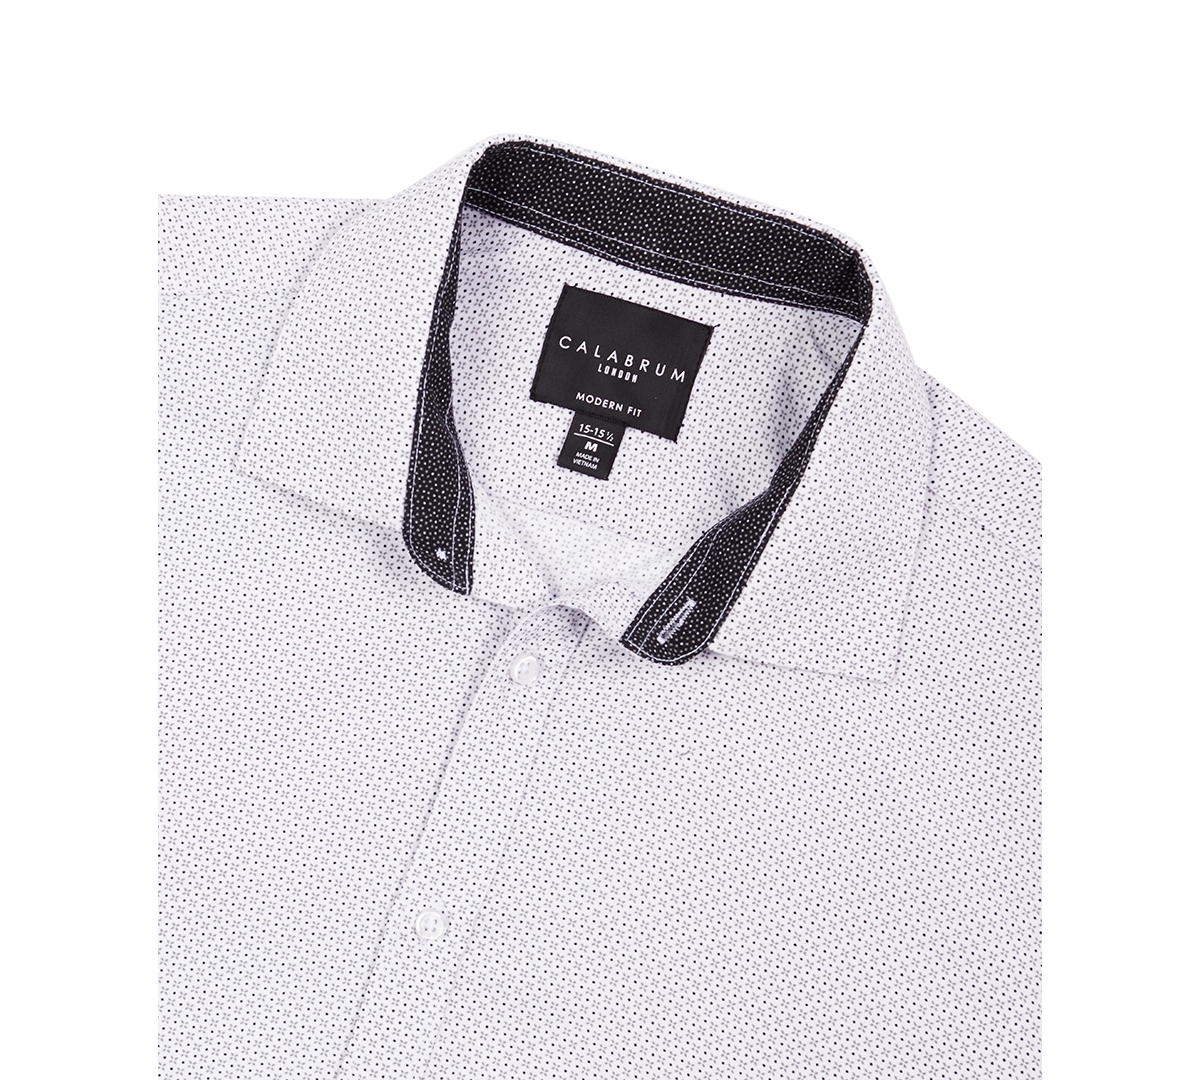 Men's Regular Fit Mini Neat Print Wrinkle Free Performance Dress Shirt - Lilac